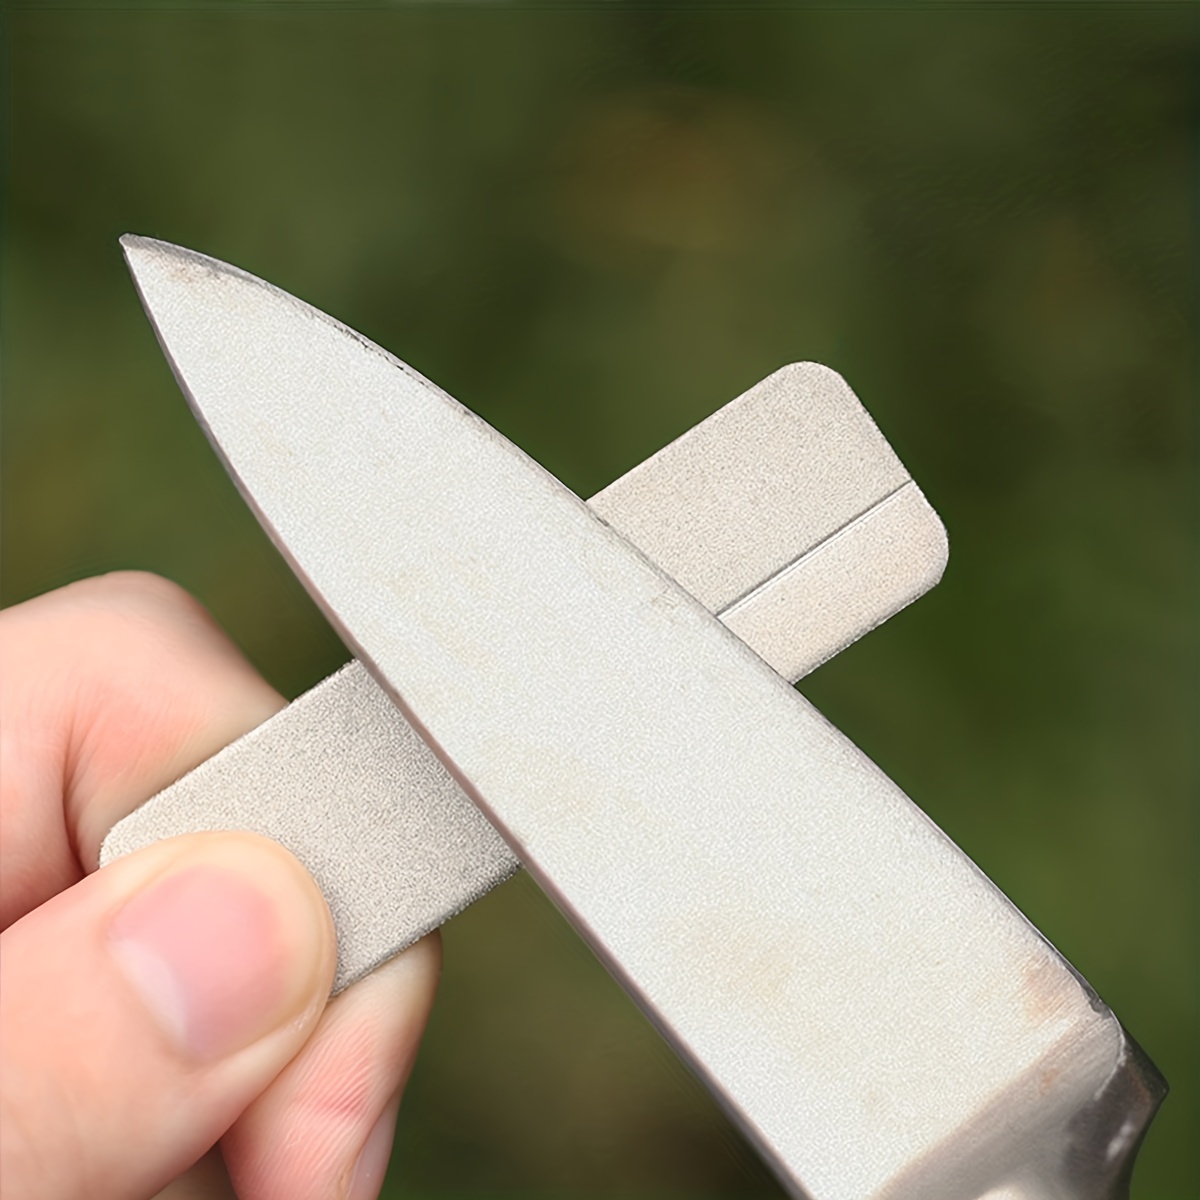 Portable Mini Knife Sharpener, Small Knife Sharpening Tool